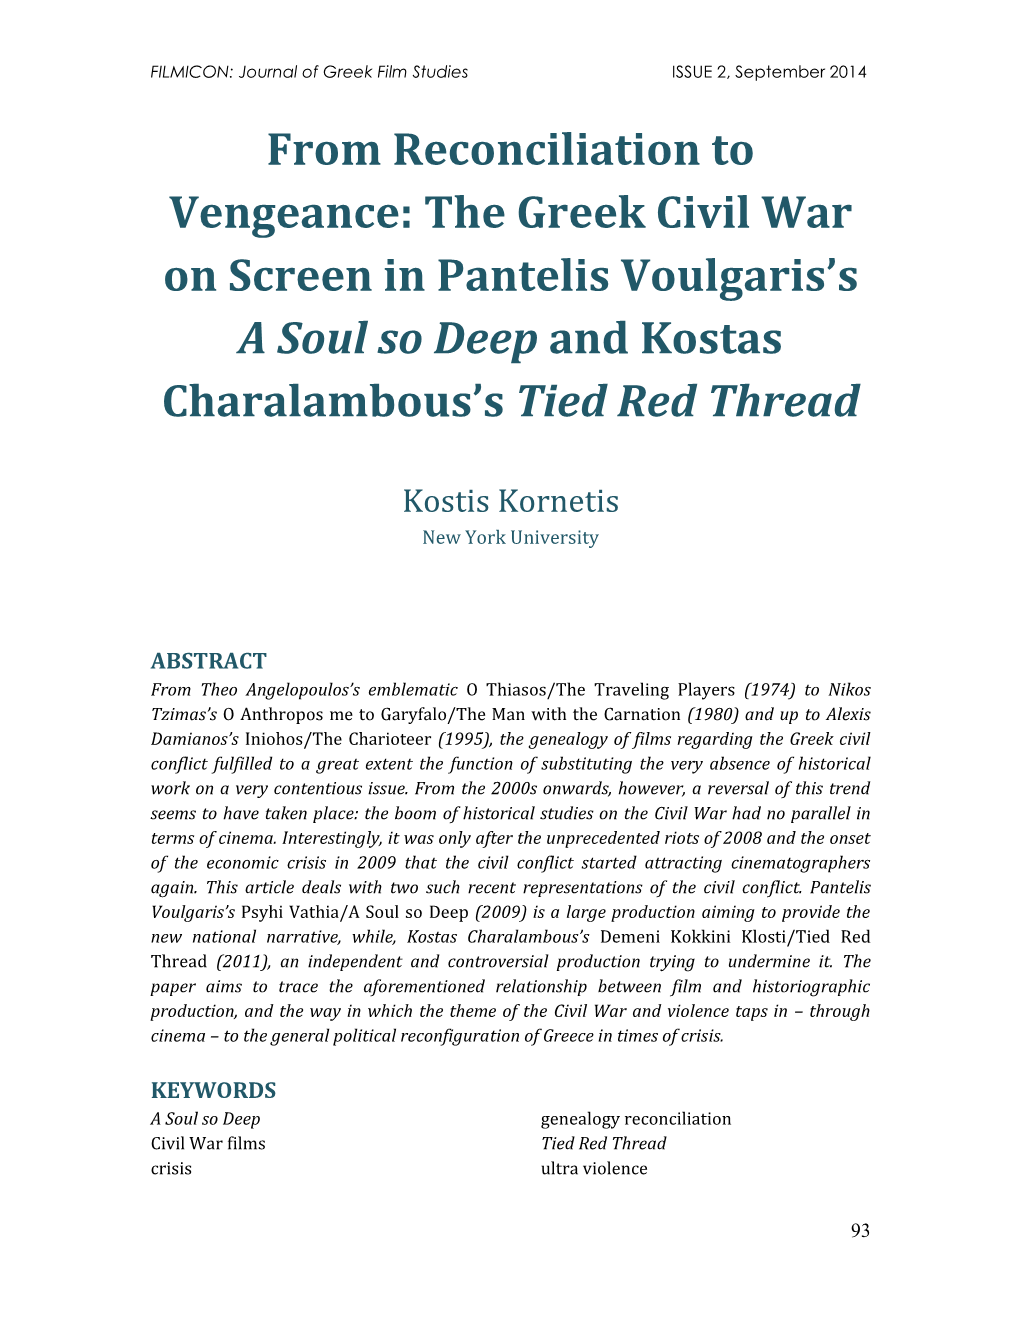 The Greek Civil War on Screen in Pantelis Voulgaris's a Soul So Deep